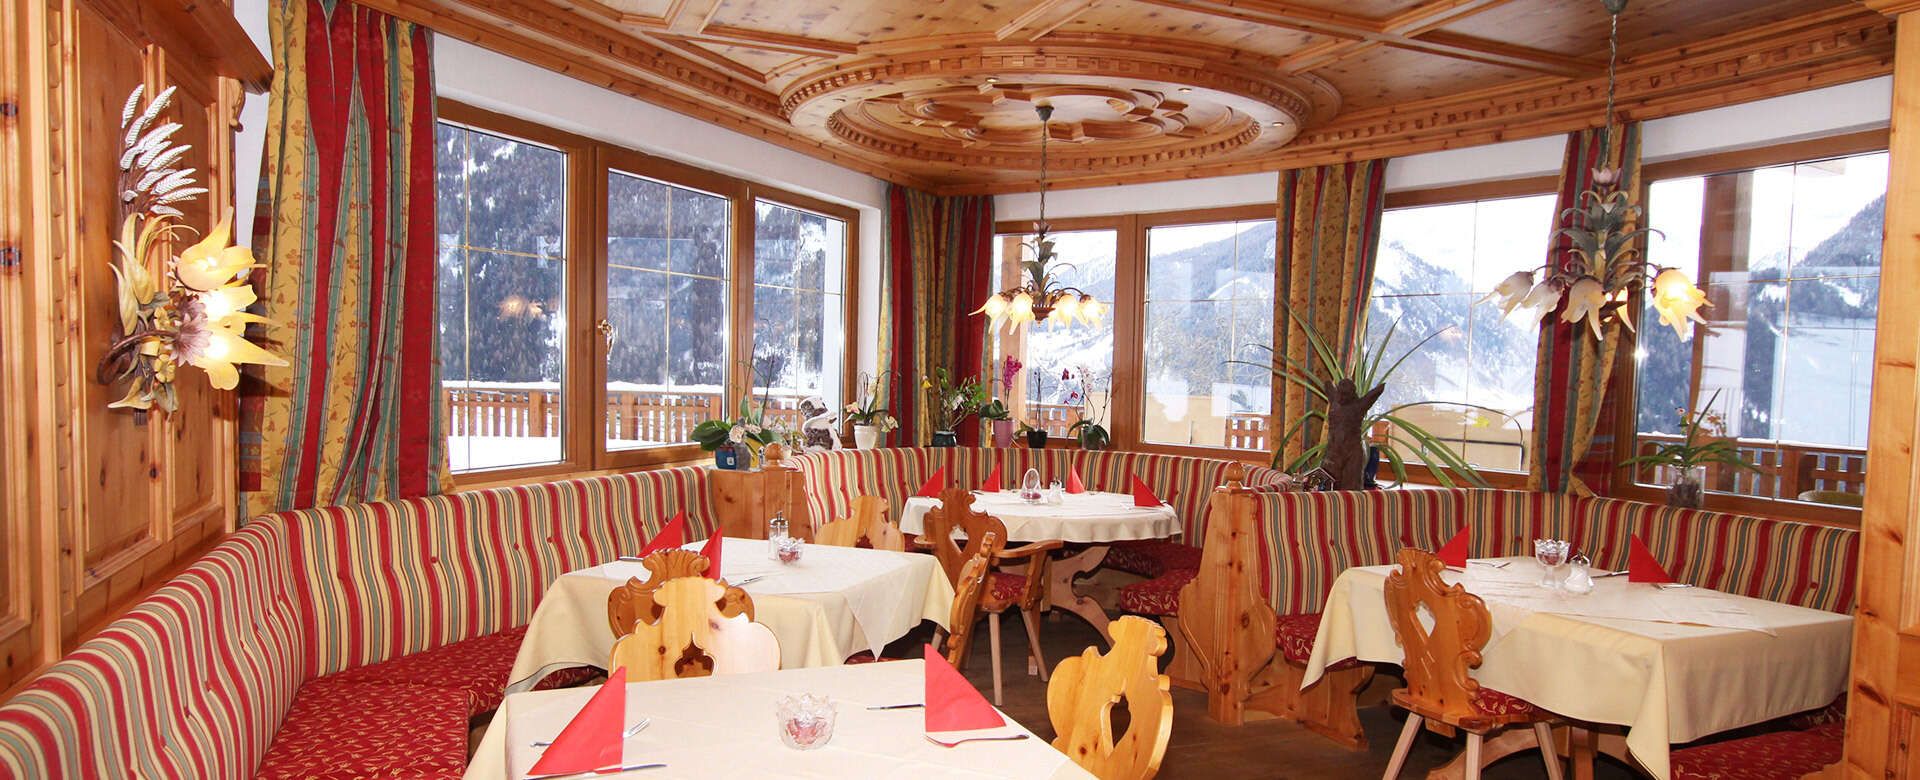 Restaurant Humlerhof in Gries am Brenner, Tirol